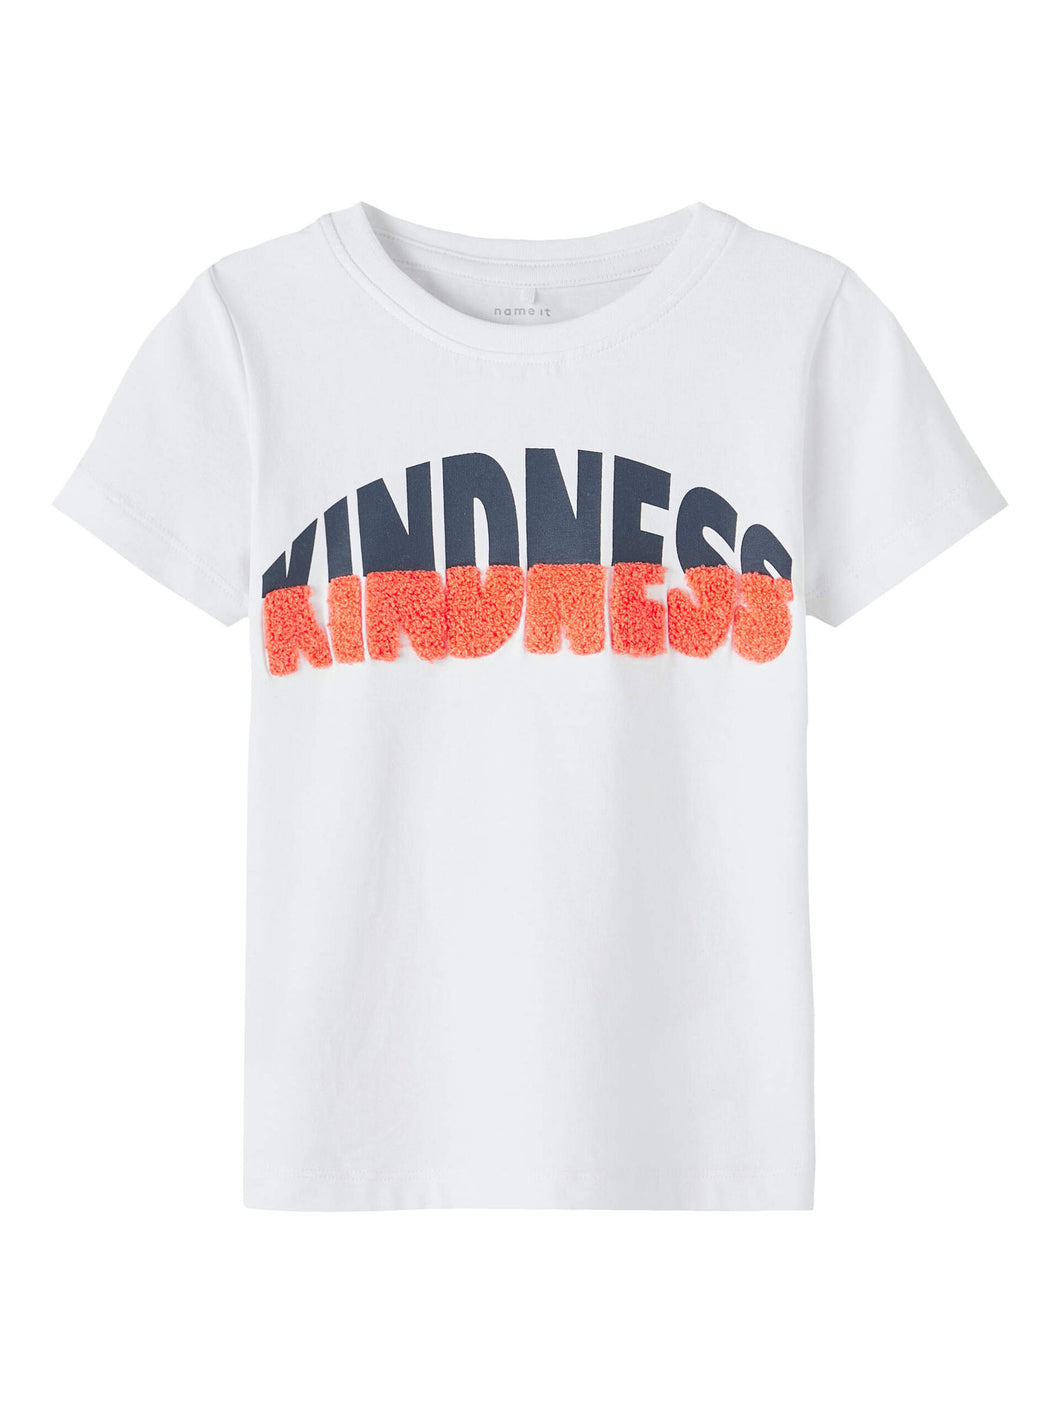 Shirt Kindness, 2 colors